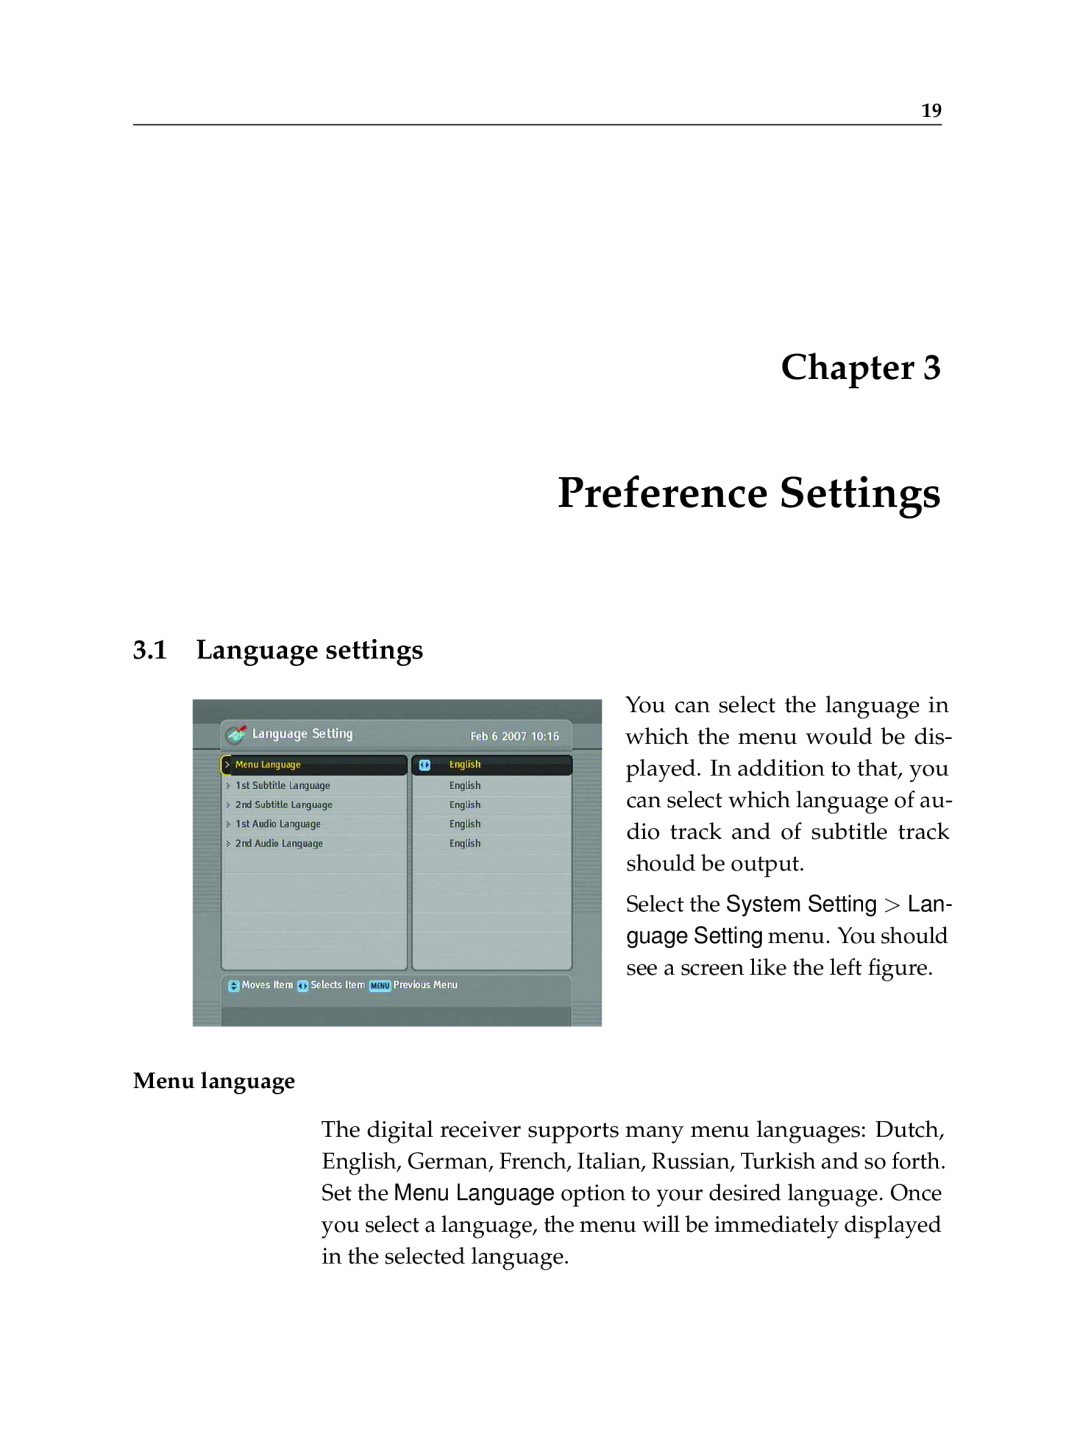 Topfield TF 7710 HD PVR, TF 7700 HD PVR manual Preference Settings, Language settings, Menu language, Chapter 